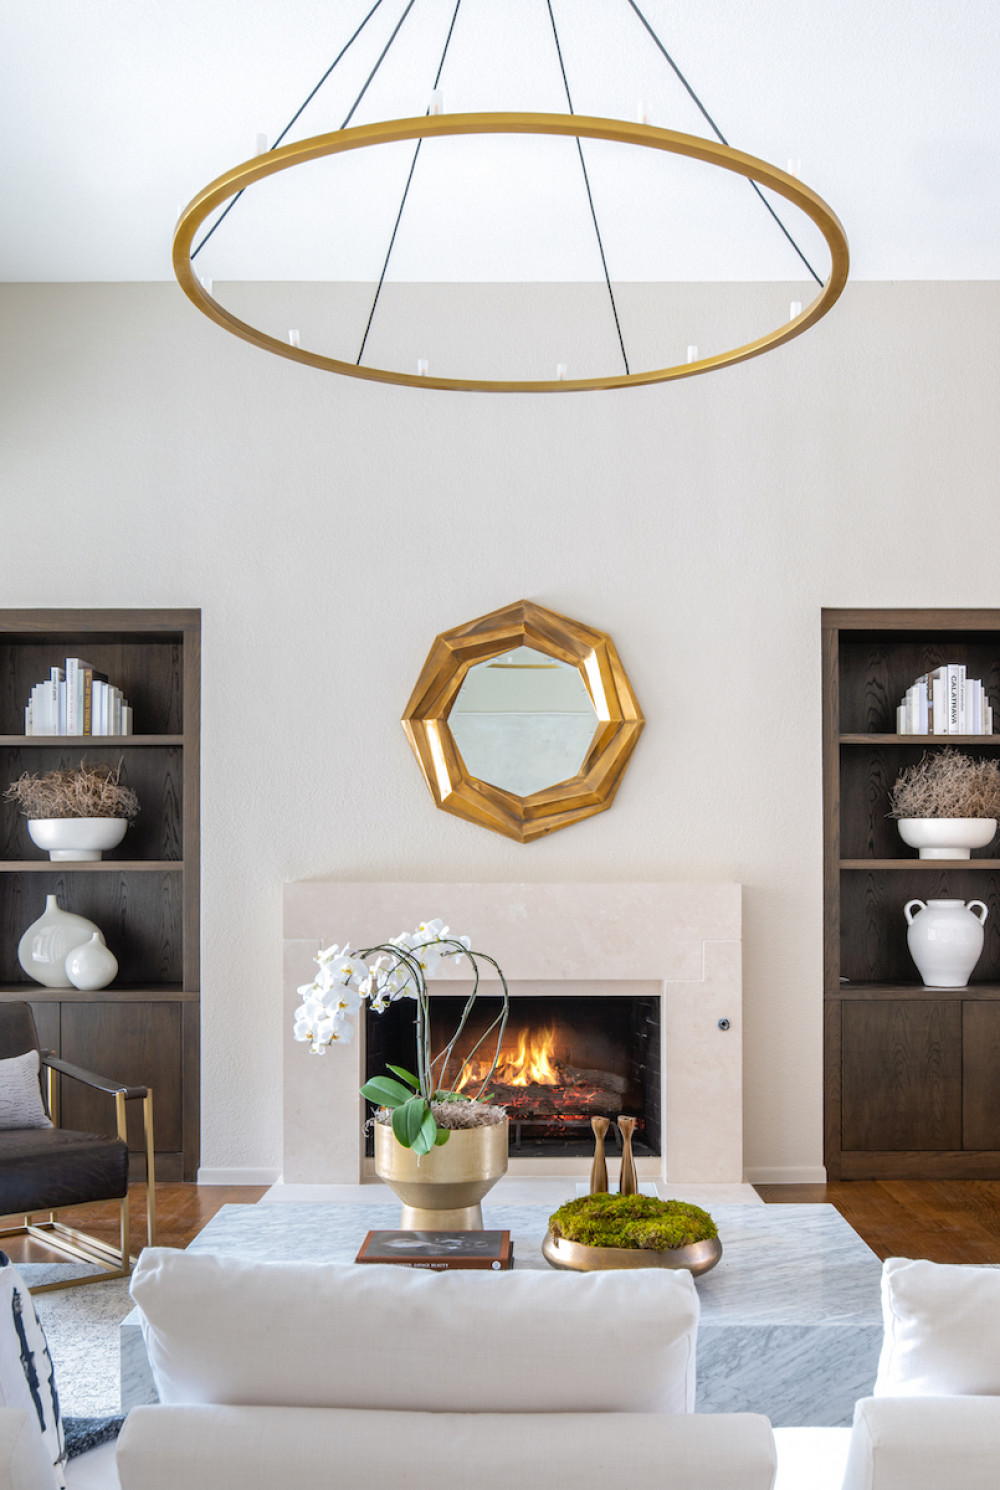 symmetry-living-room-interior-design-gold-mirror-over-fireplace